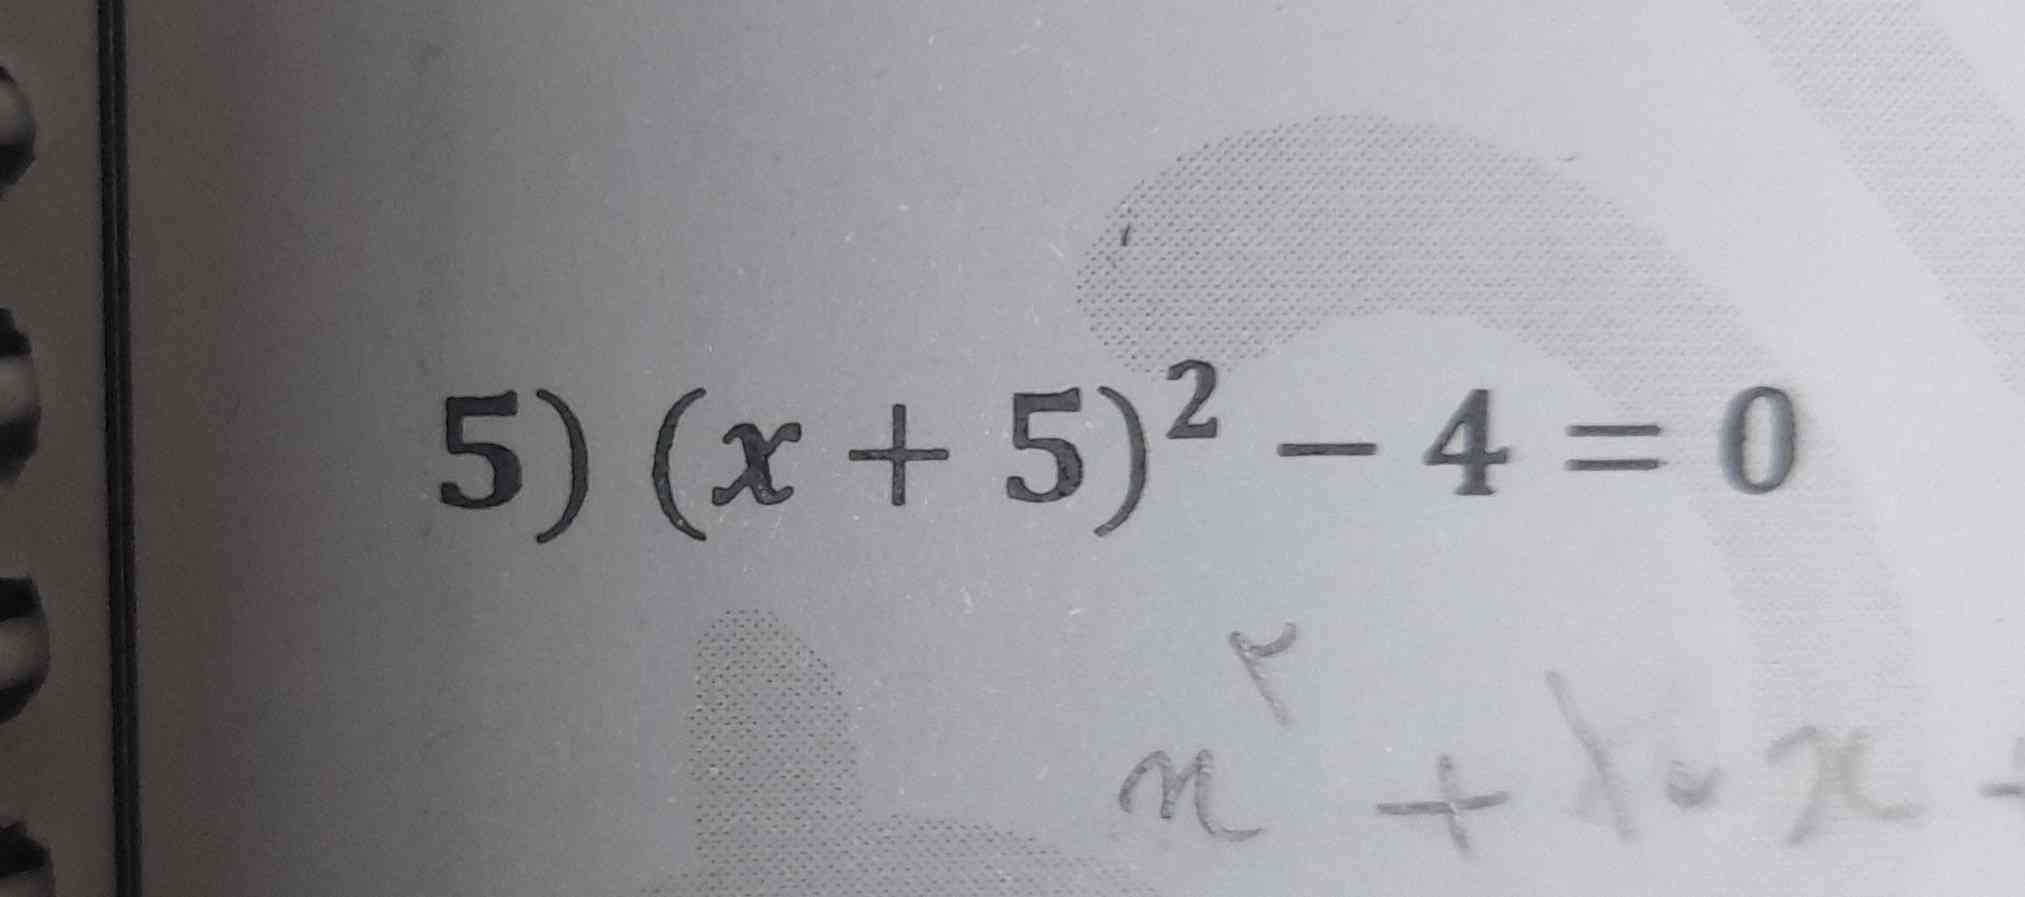 سلام این معادله رو به روش تجزیه حل میکنین
فقط تجزیه دمتون گرم‌معرکه یادم نمیره